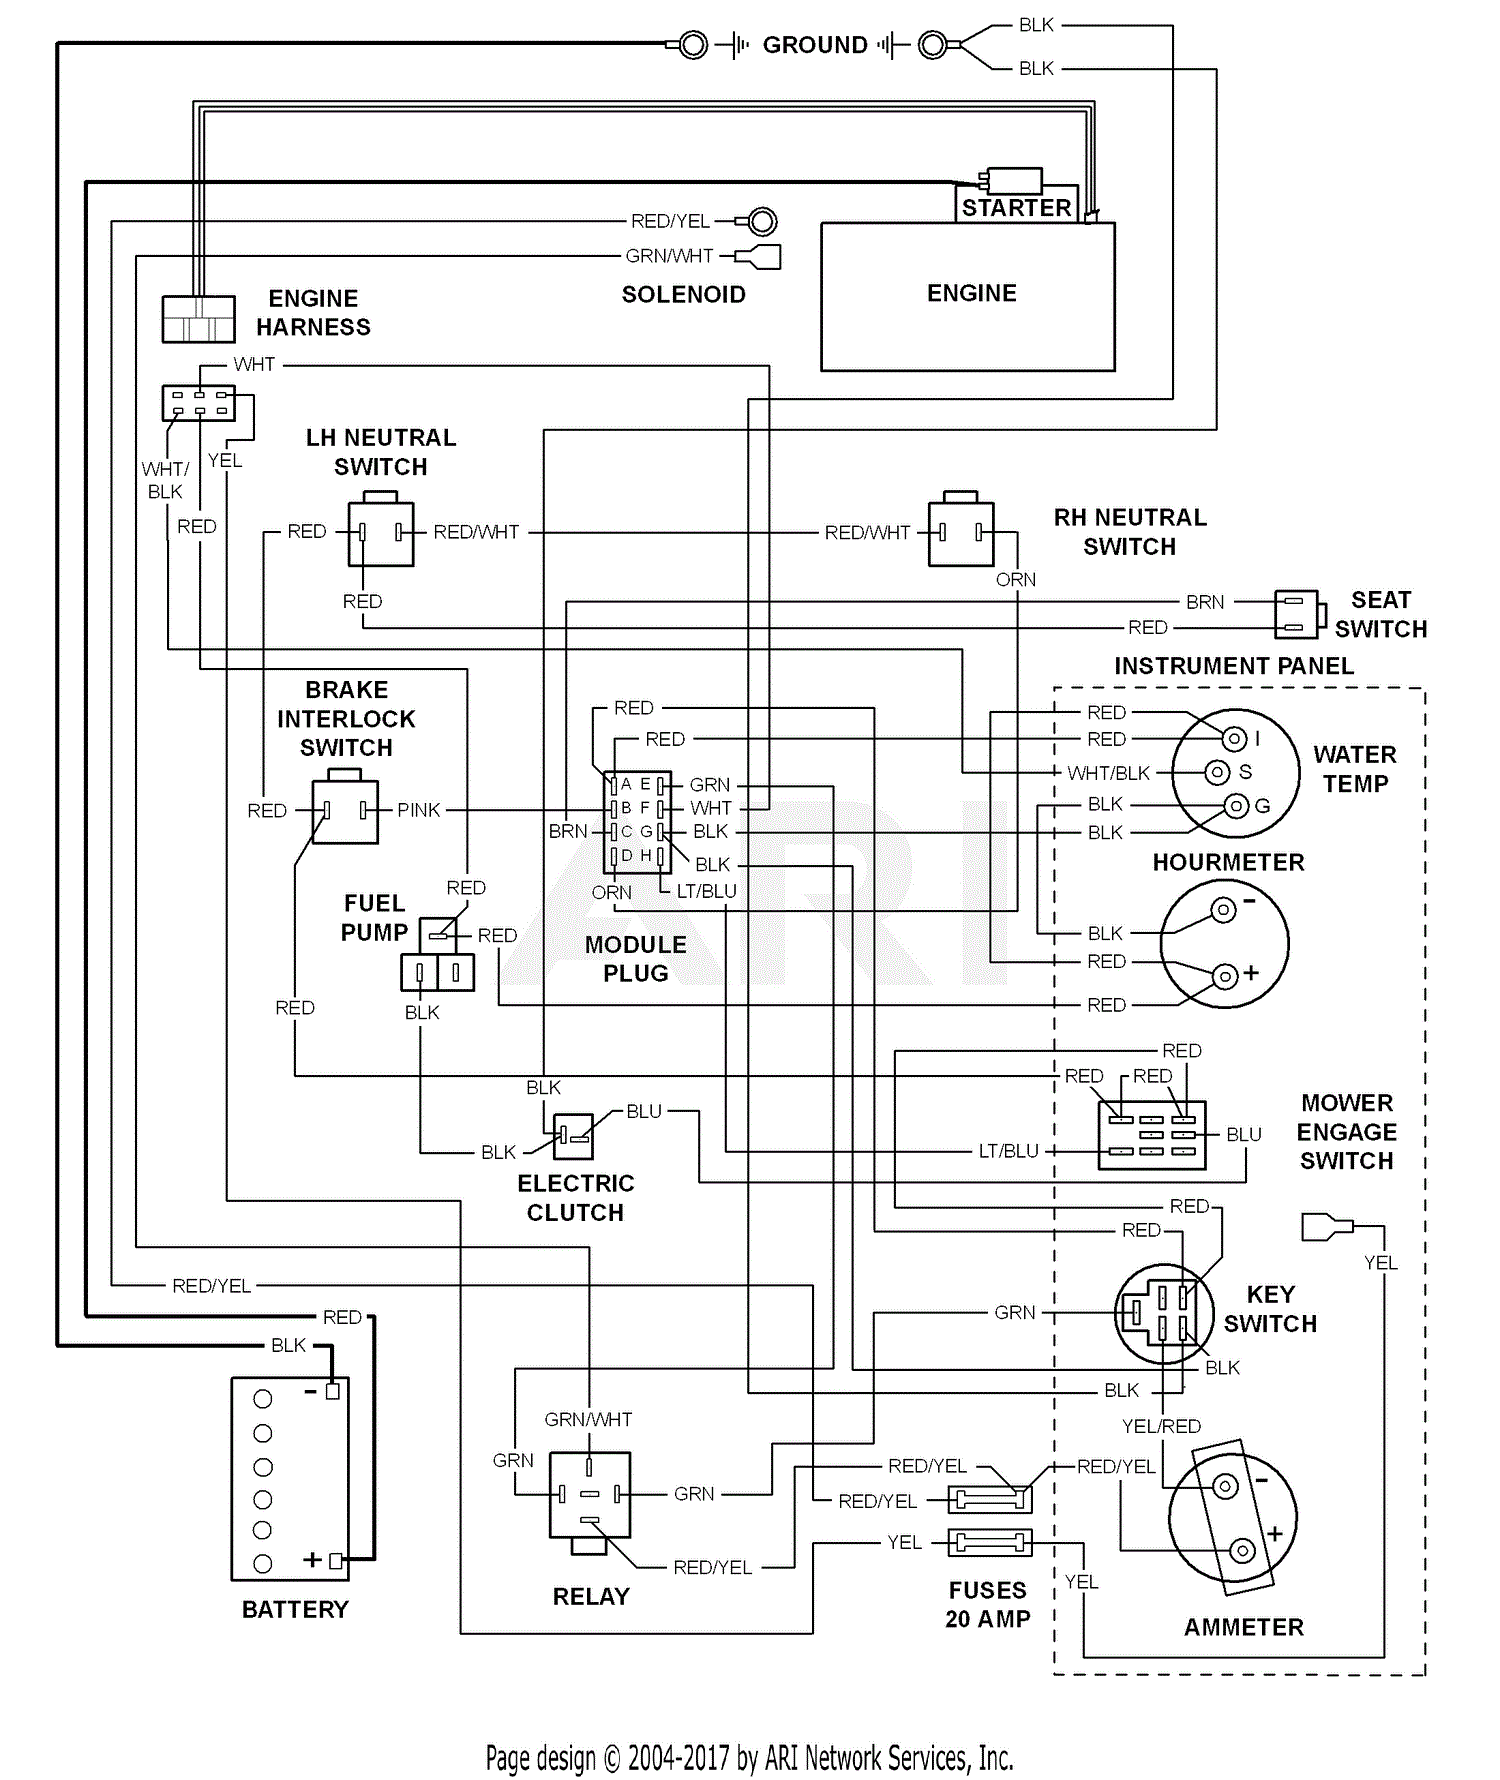 Electrical Schematic 22hp Kawasaki